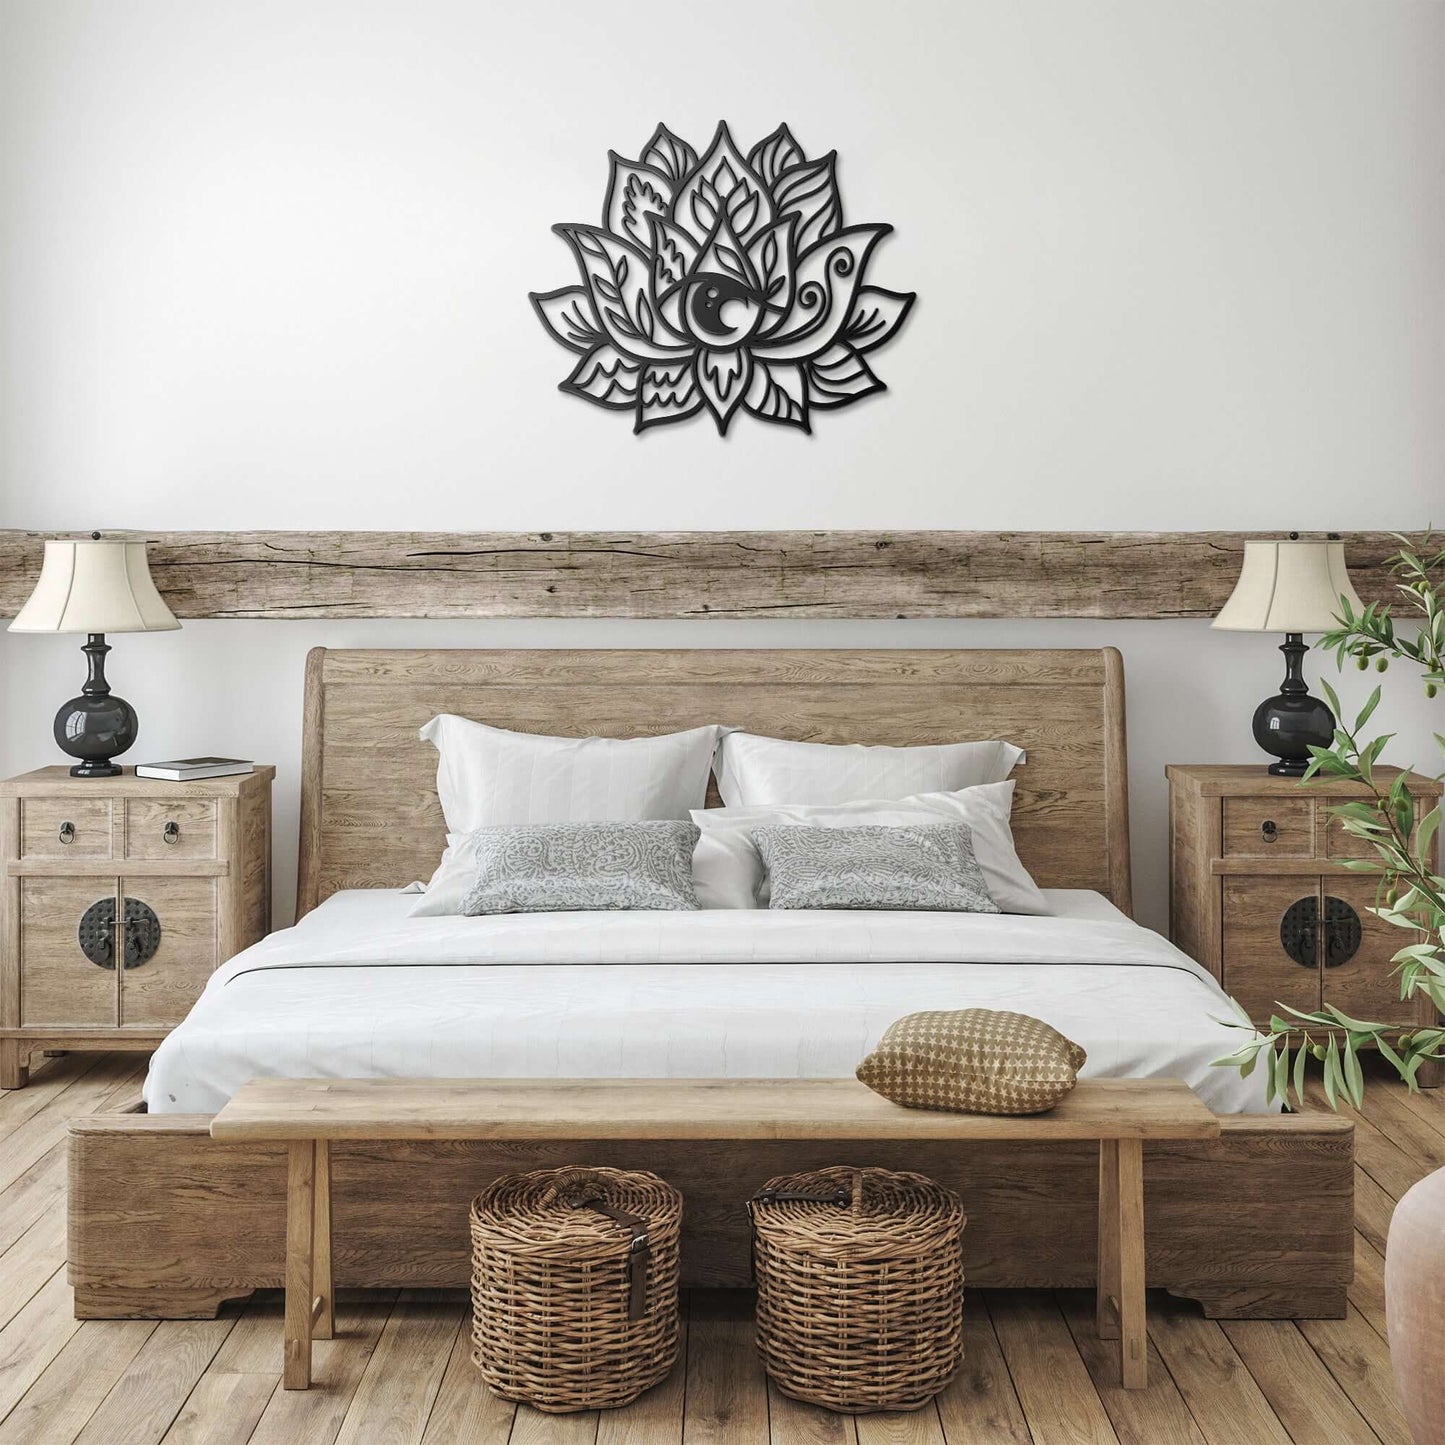 Lotus Flower Wall Art, Metal Wall Art, Wall Hangings, Wall Decor, Mandala Wall Art, Home Decor, Living Room Decor, Spiritual Gifts